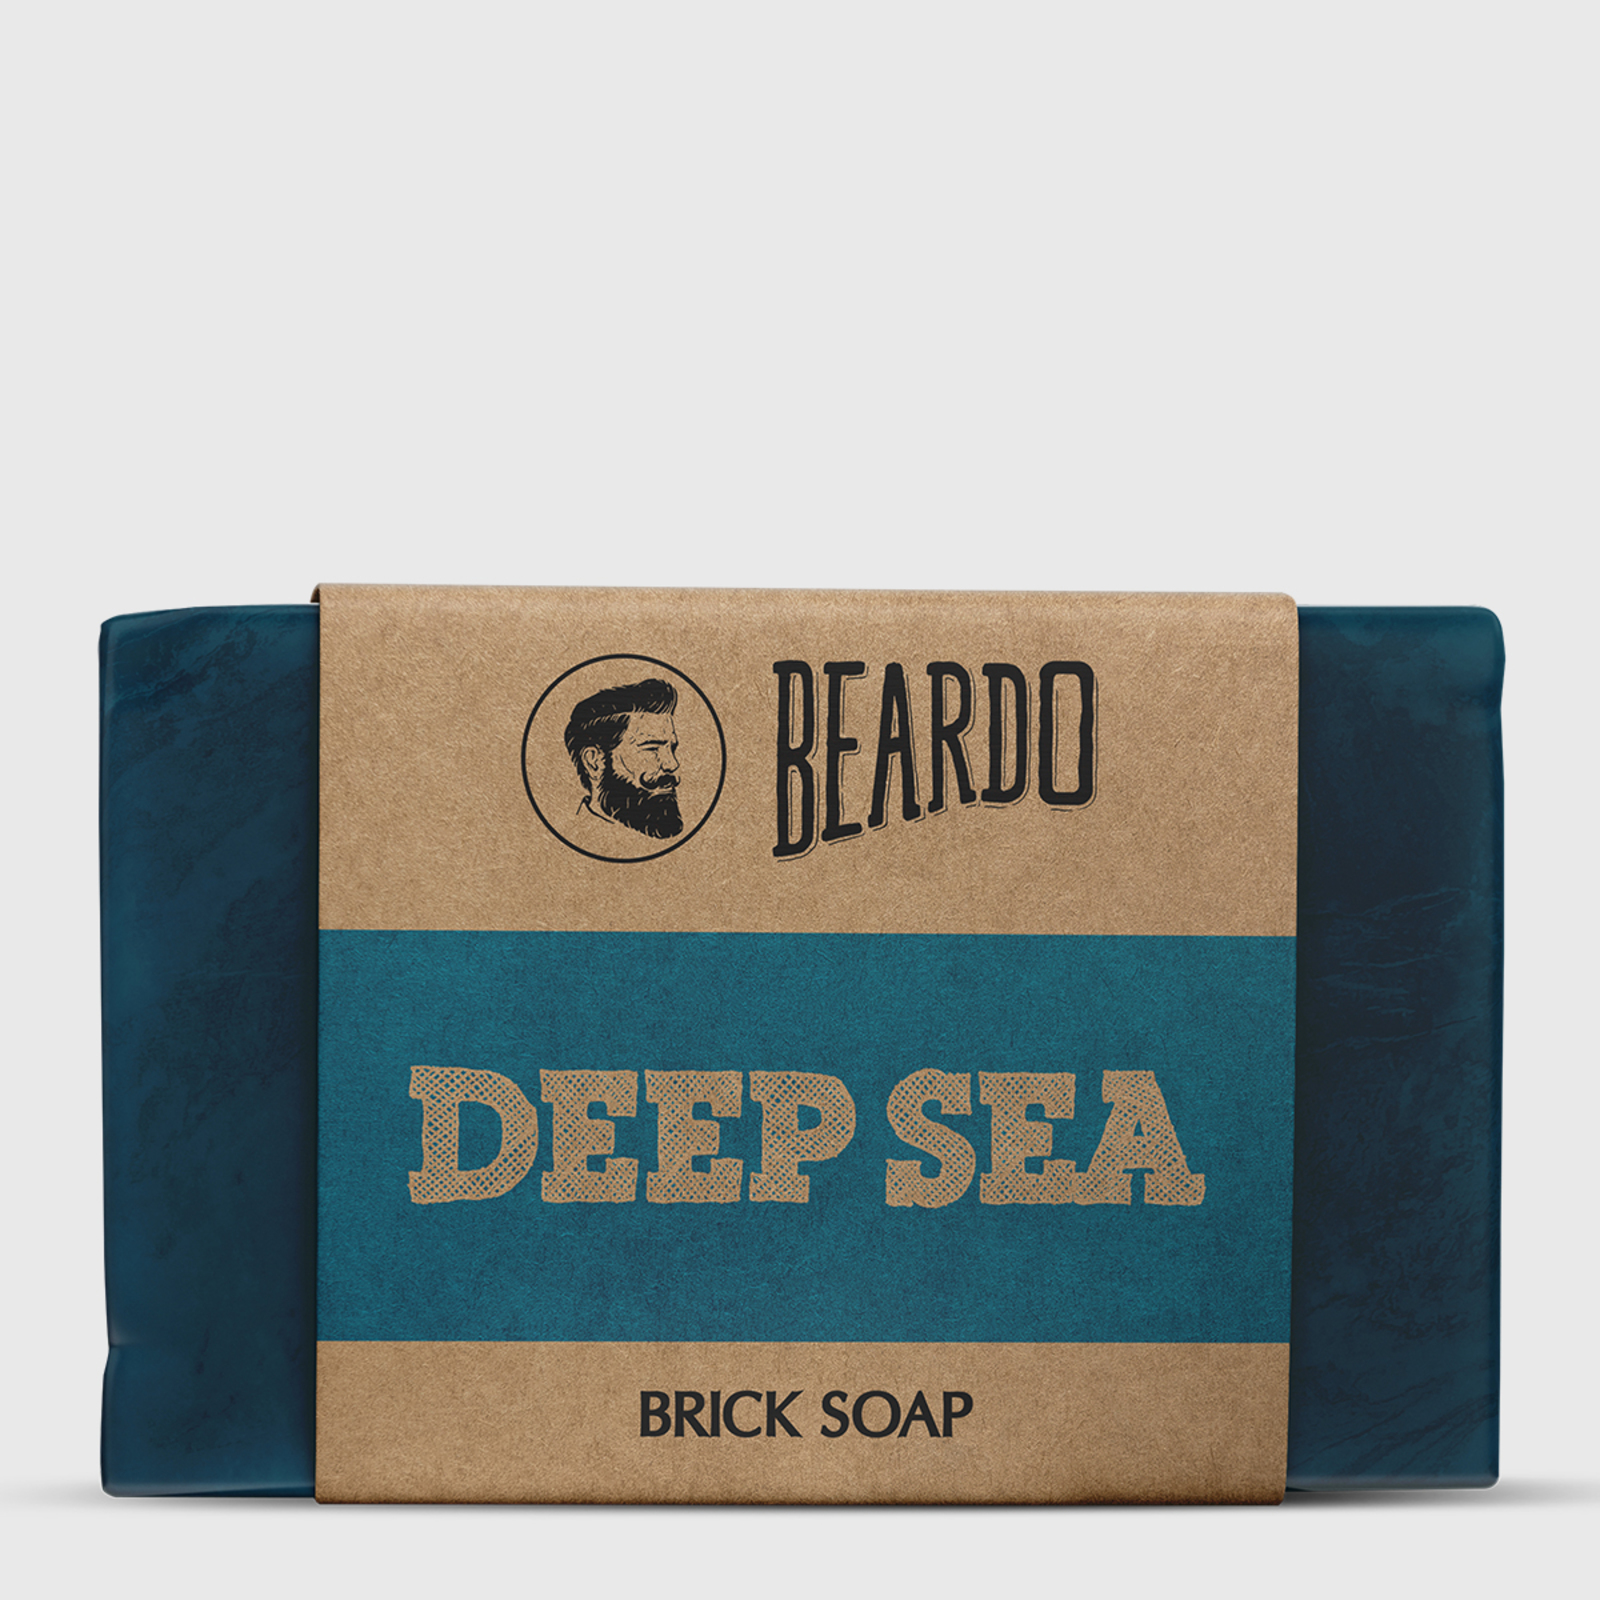 Beardo Deep Sea Brick Soap   coupon code